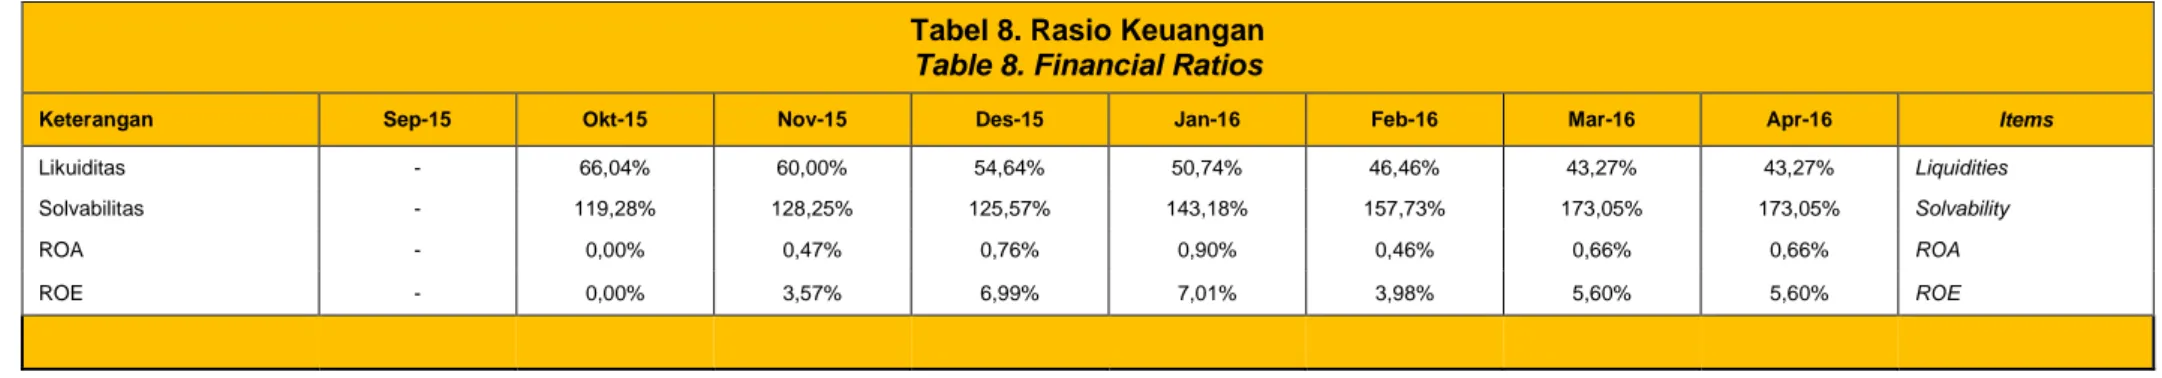 Table 8. Financial Ratios